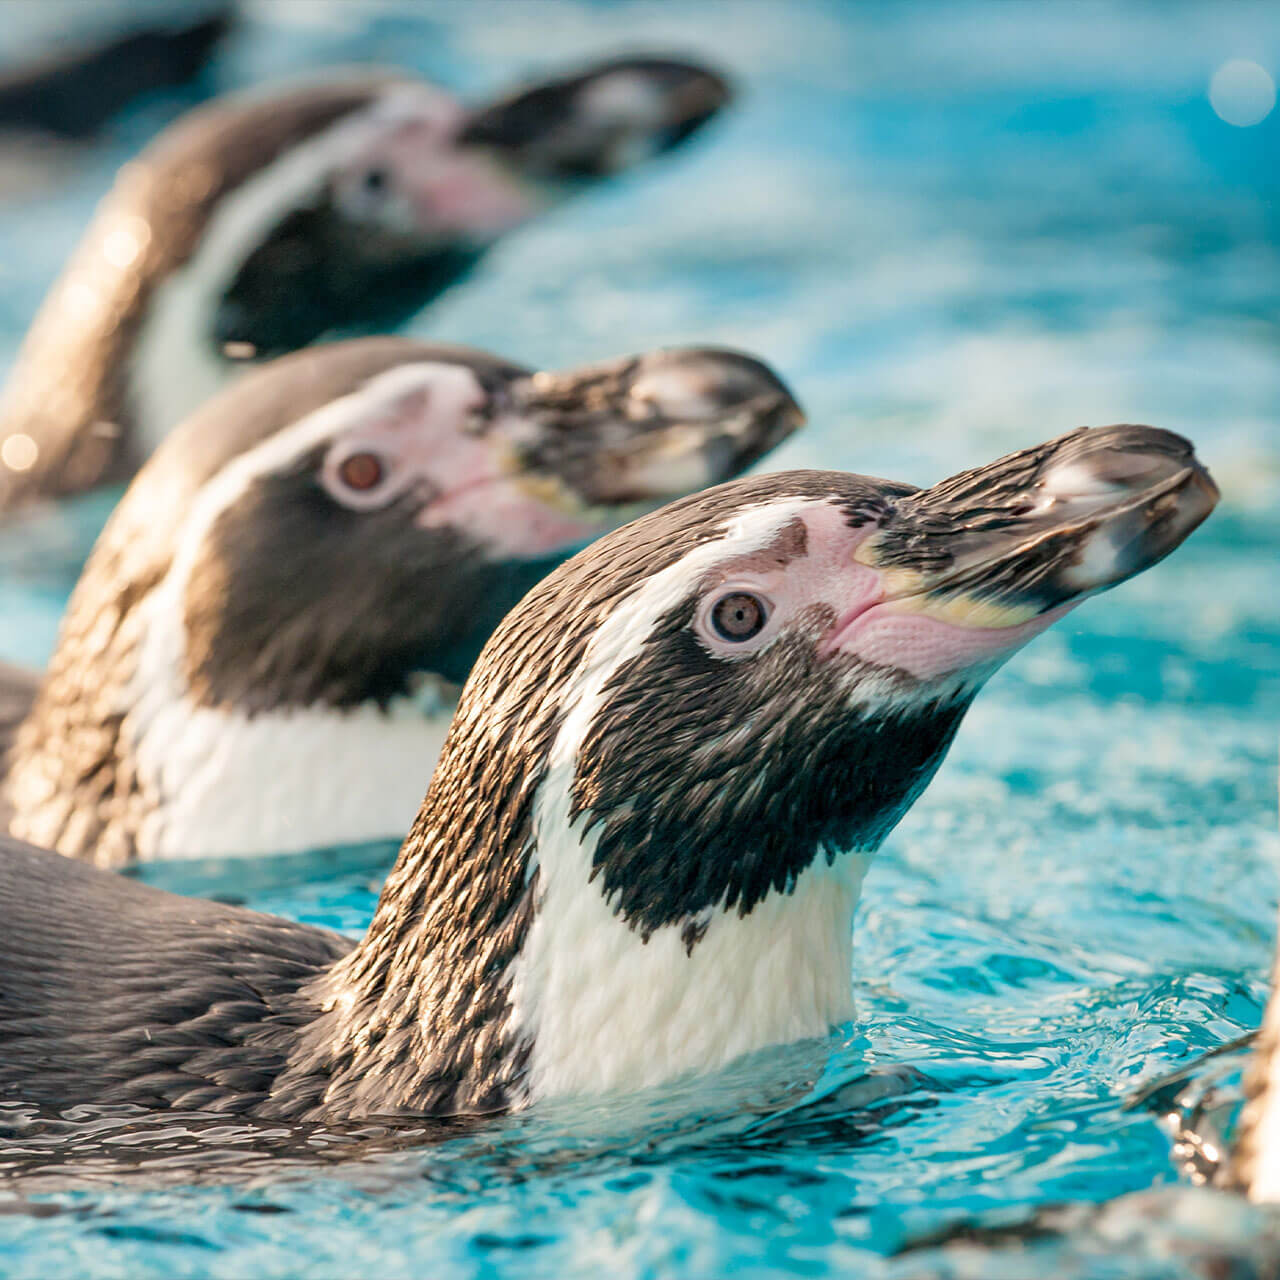 Chessington Zoo Winter Penguins